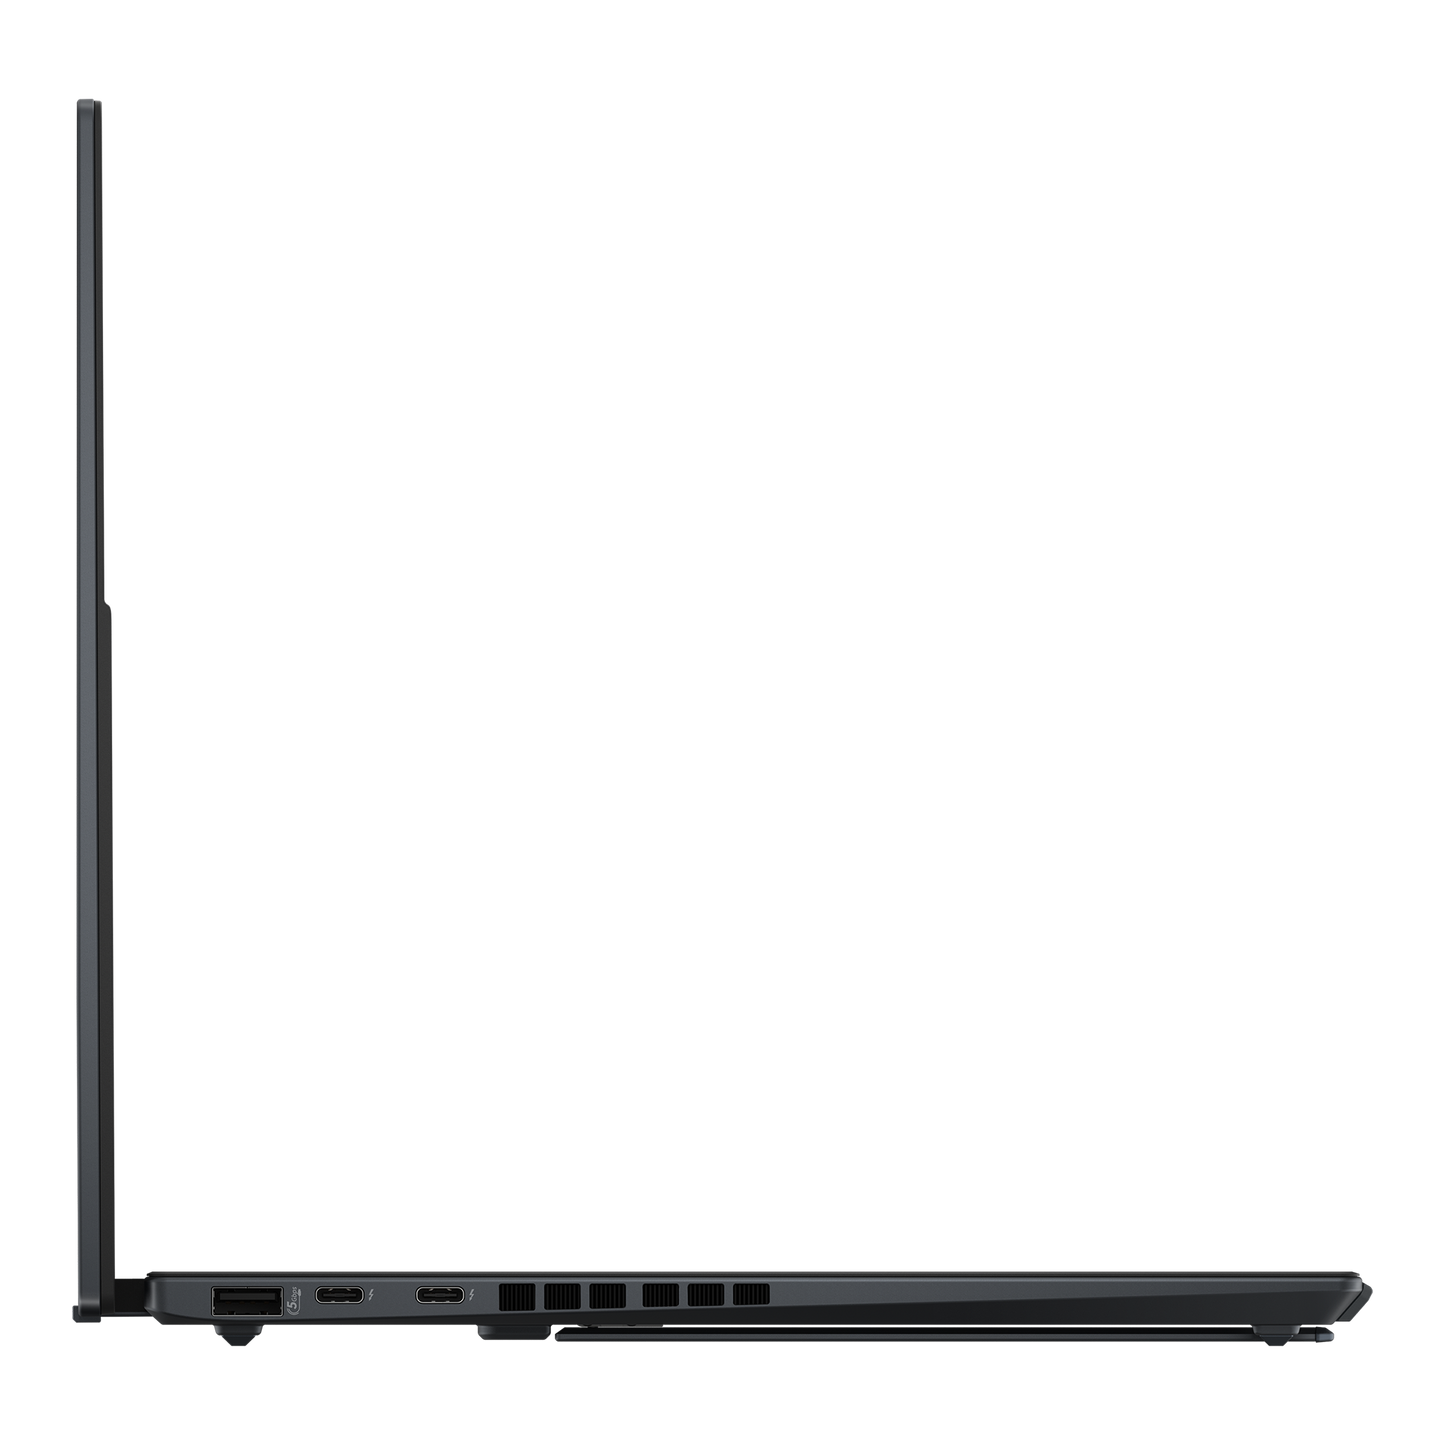 ASUS Zenbook Duo UX8406MA-DS76T Dual-Touchscreen Laptop